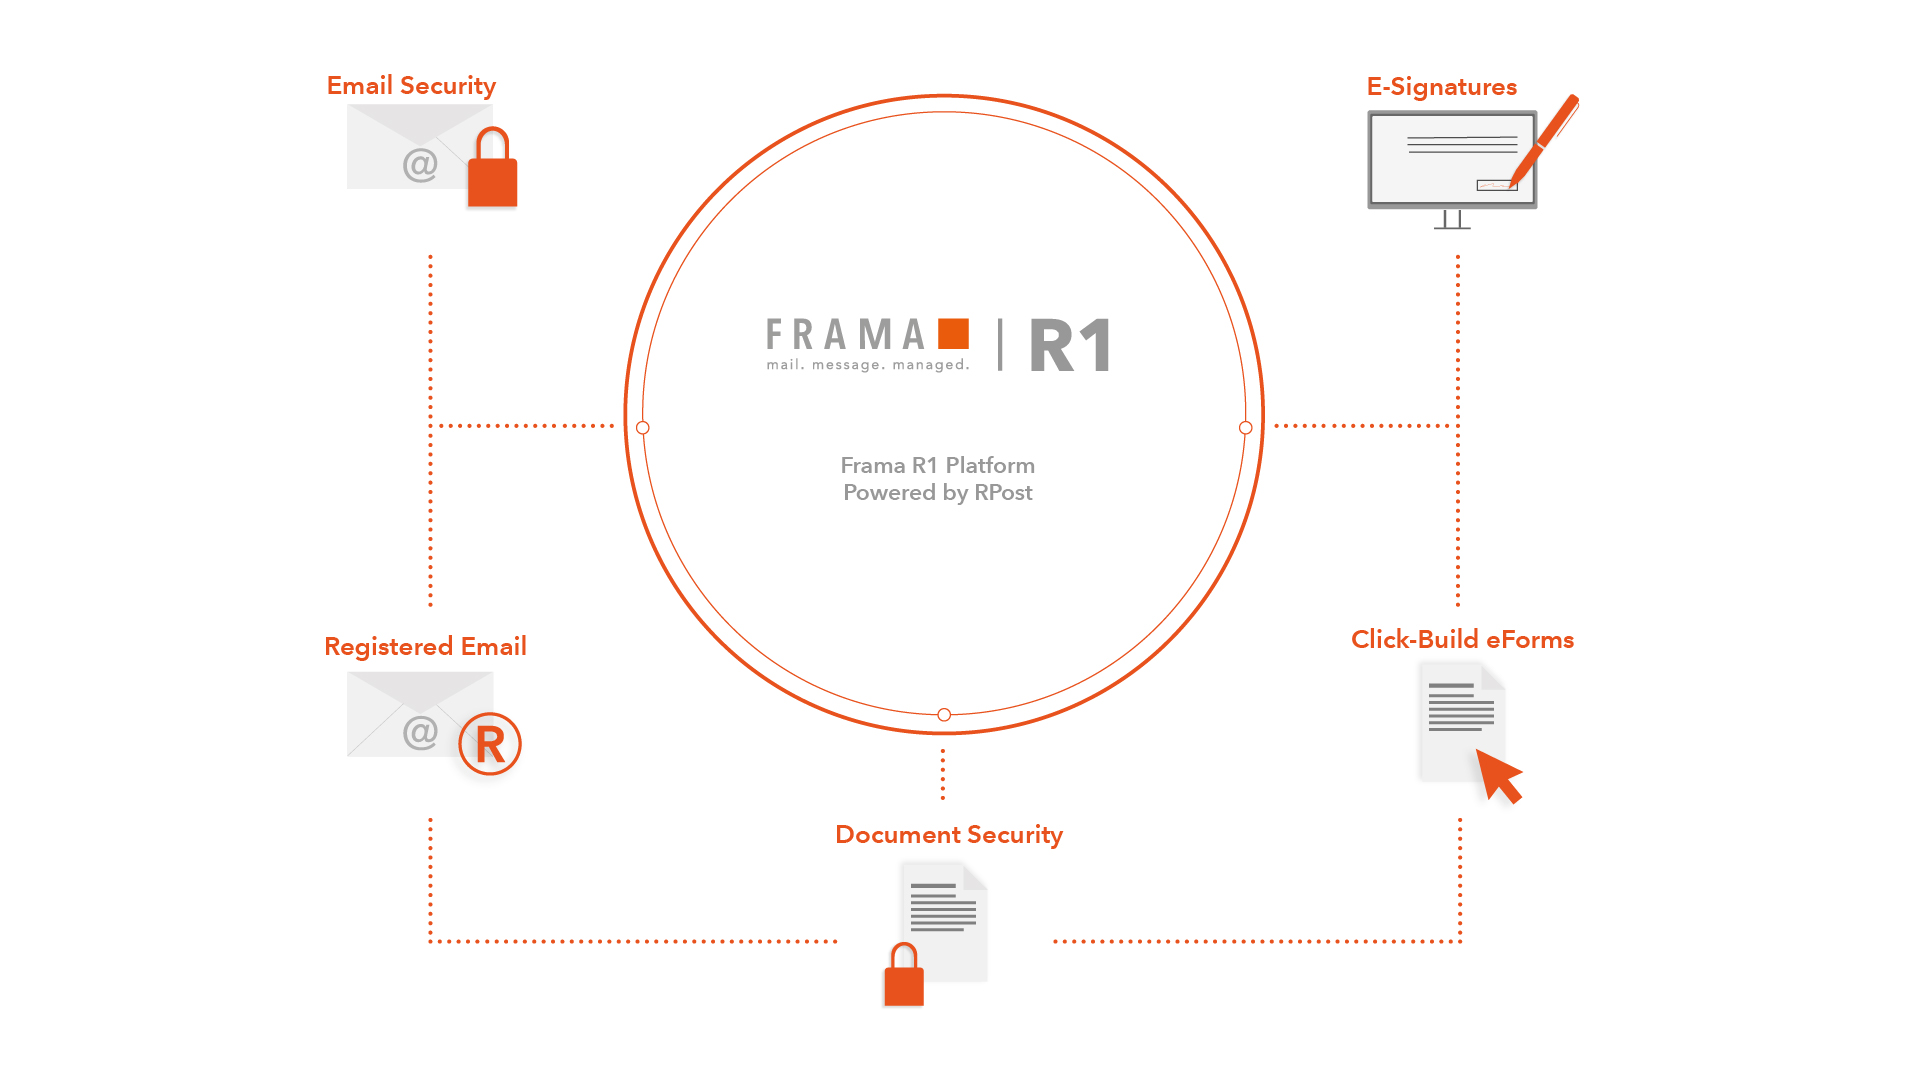 R1 Plattform - Features and Tools | Frama